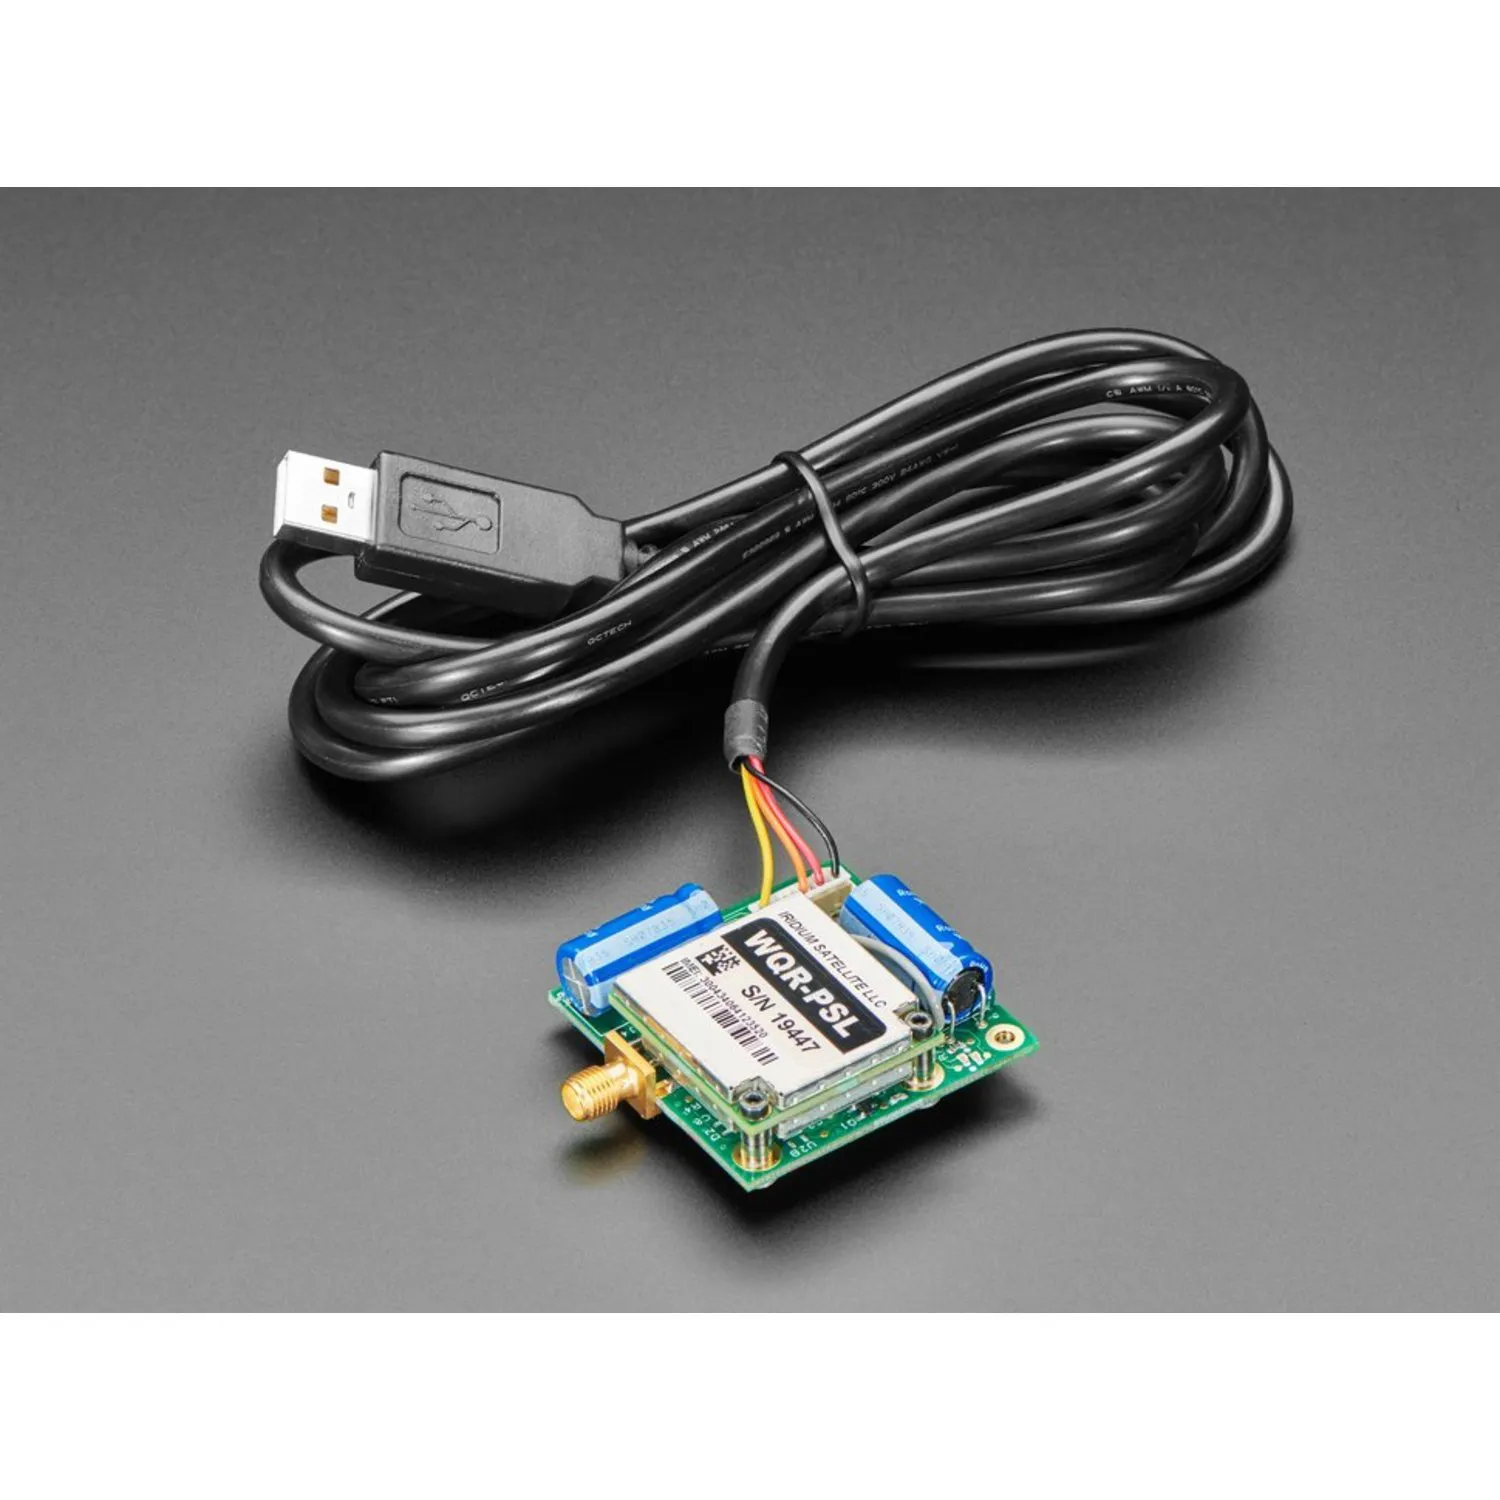 Photo of RockBLOCK 9603 with USB Cable - Iridium Satellite Modem Bundle